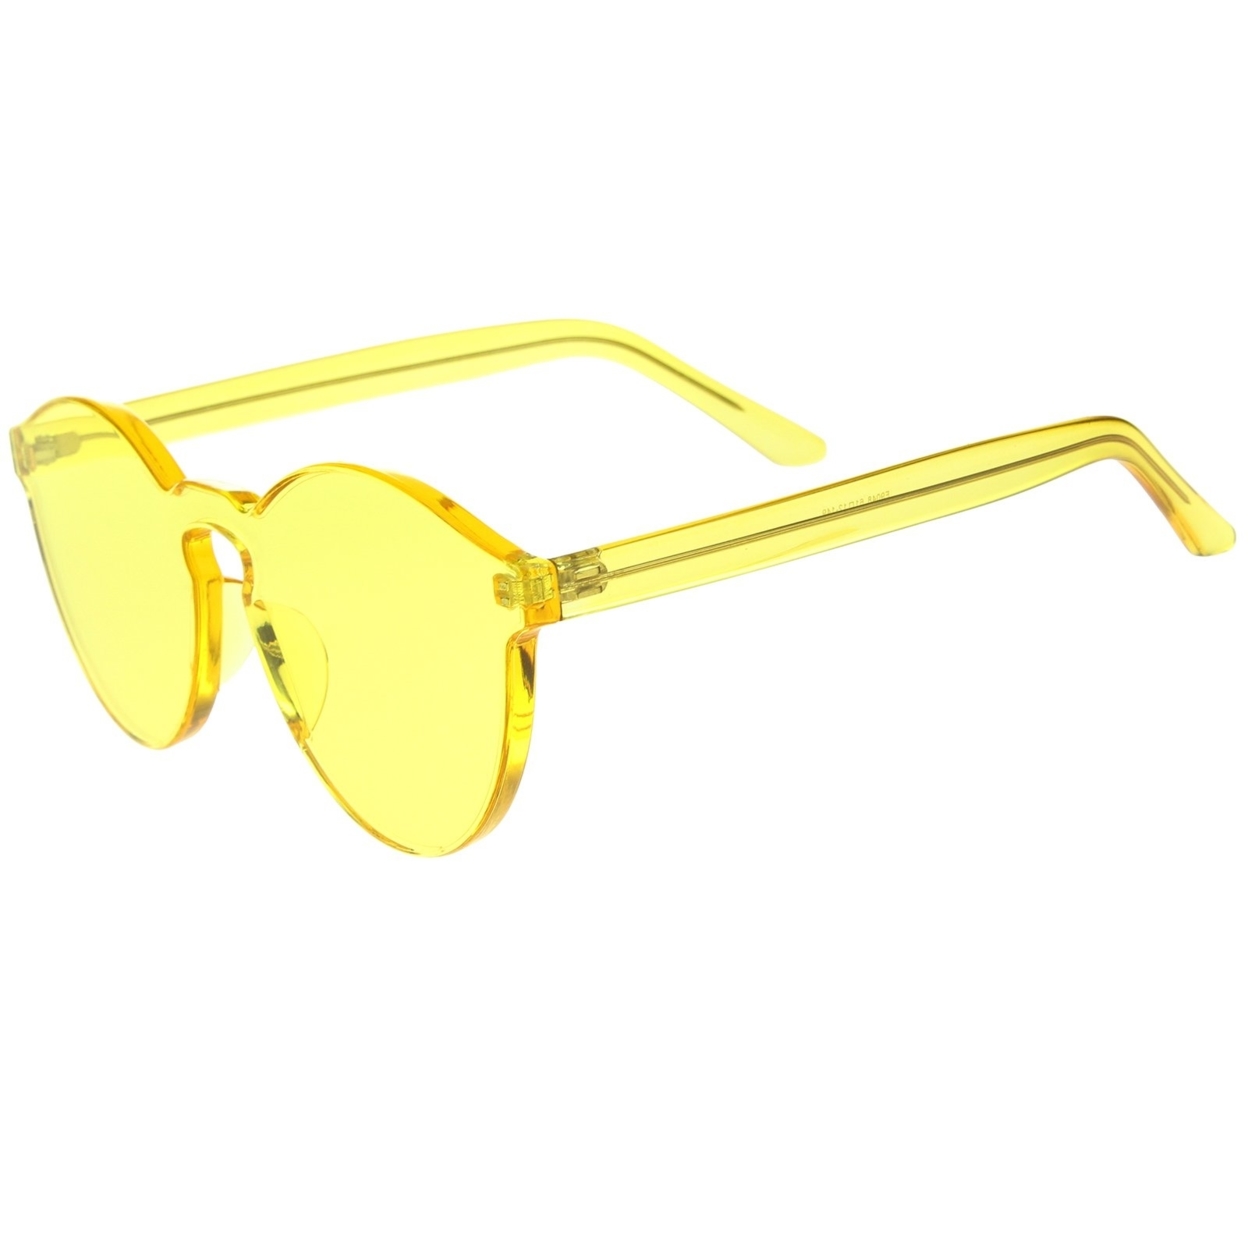 One Piece PC Lens Rimless Ultra-Bold Colorful Mono Block Sunglasses 60mm - Smoke